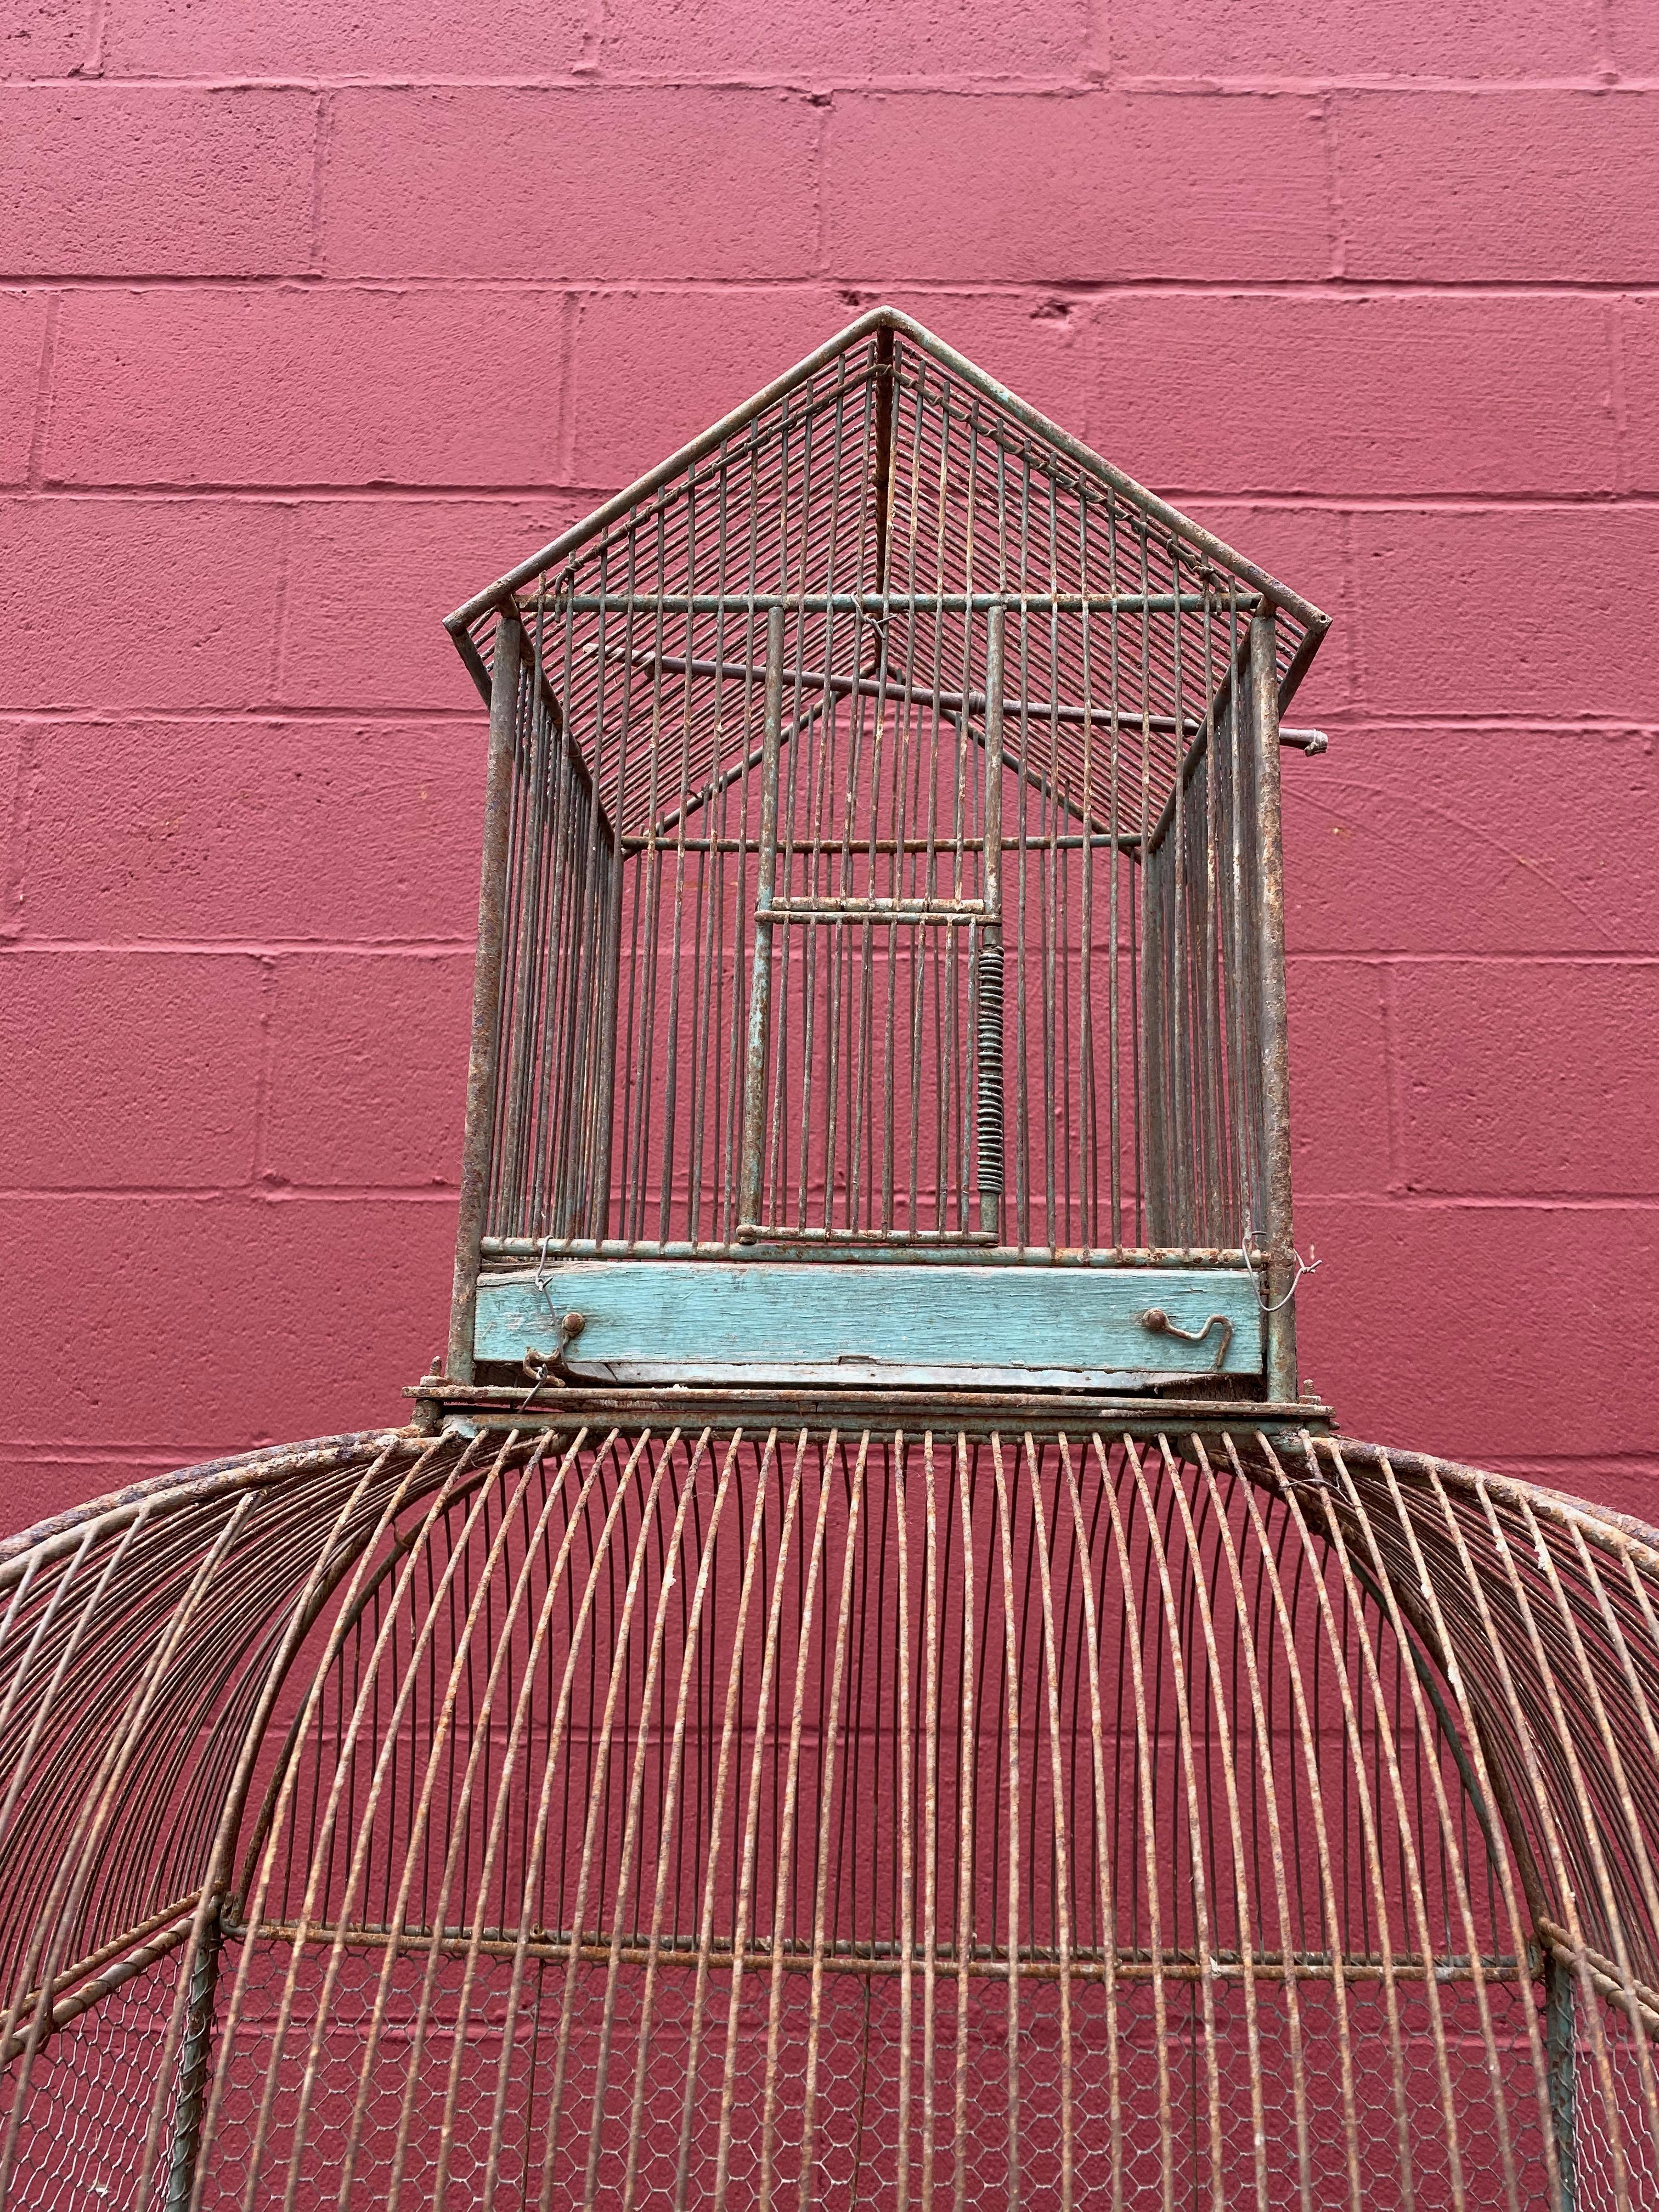 armoire bird cage